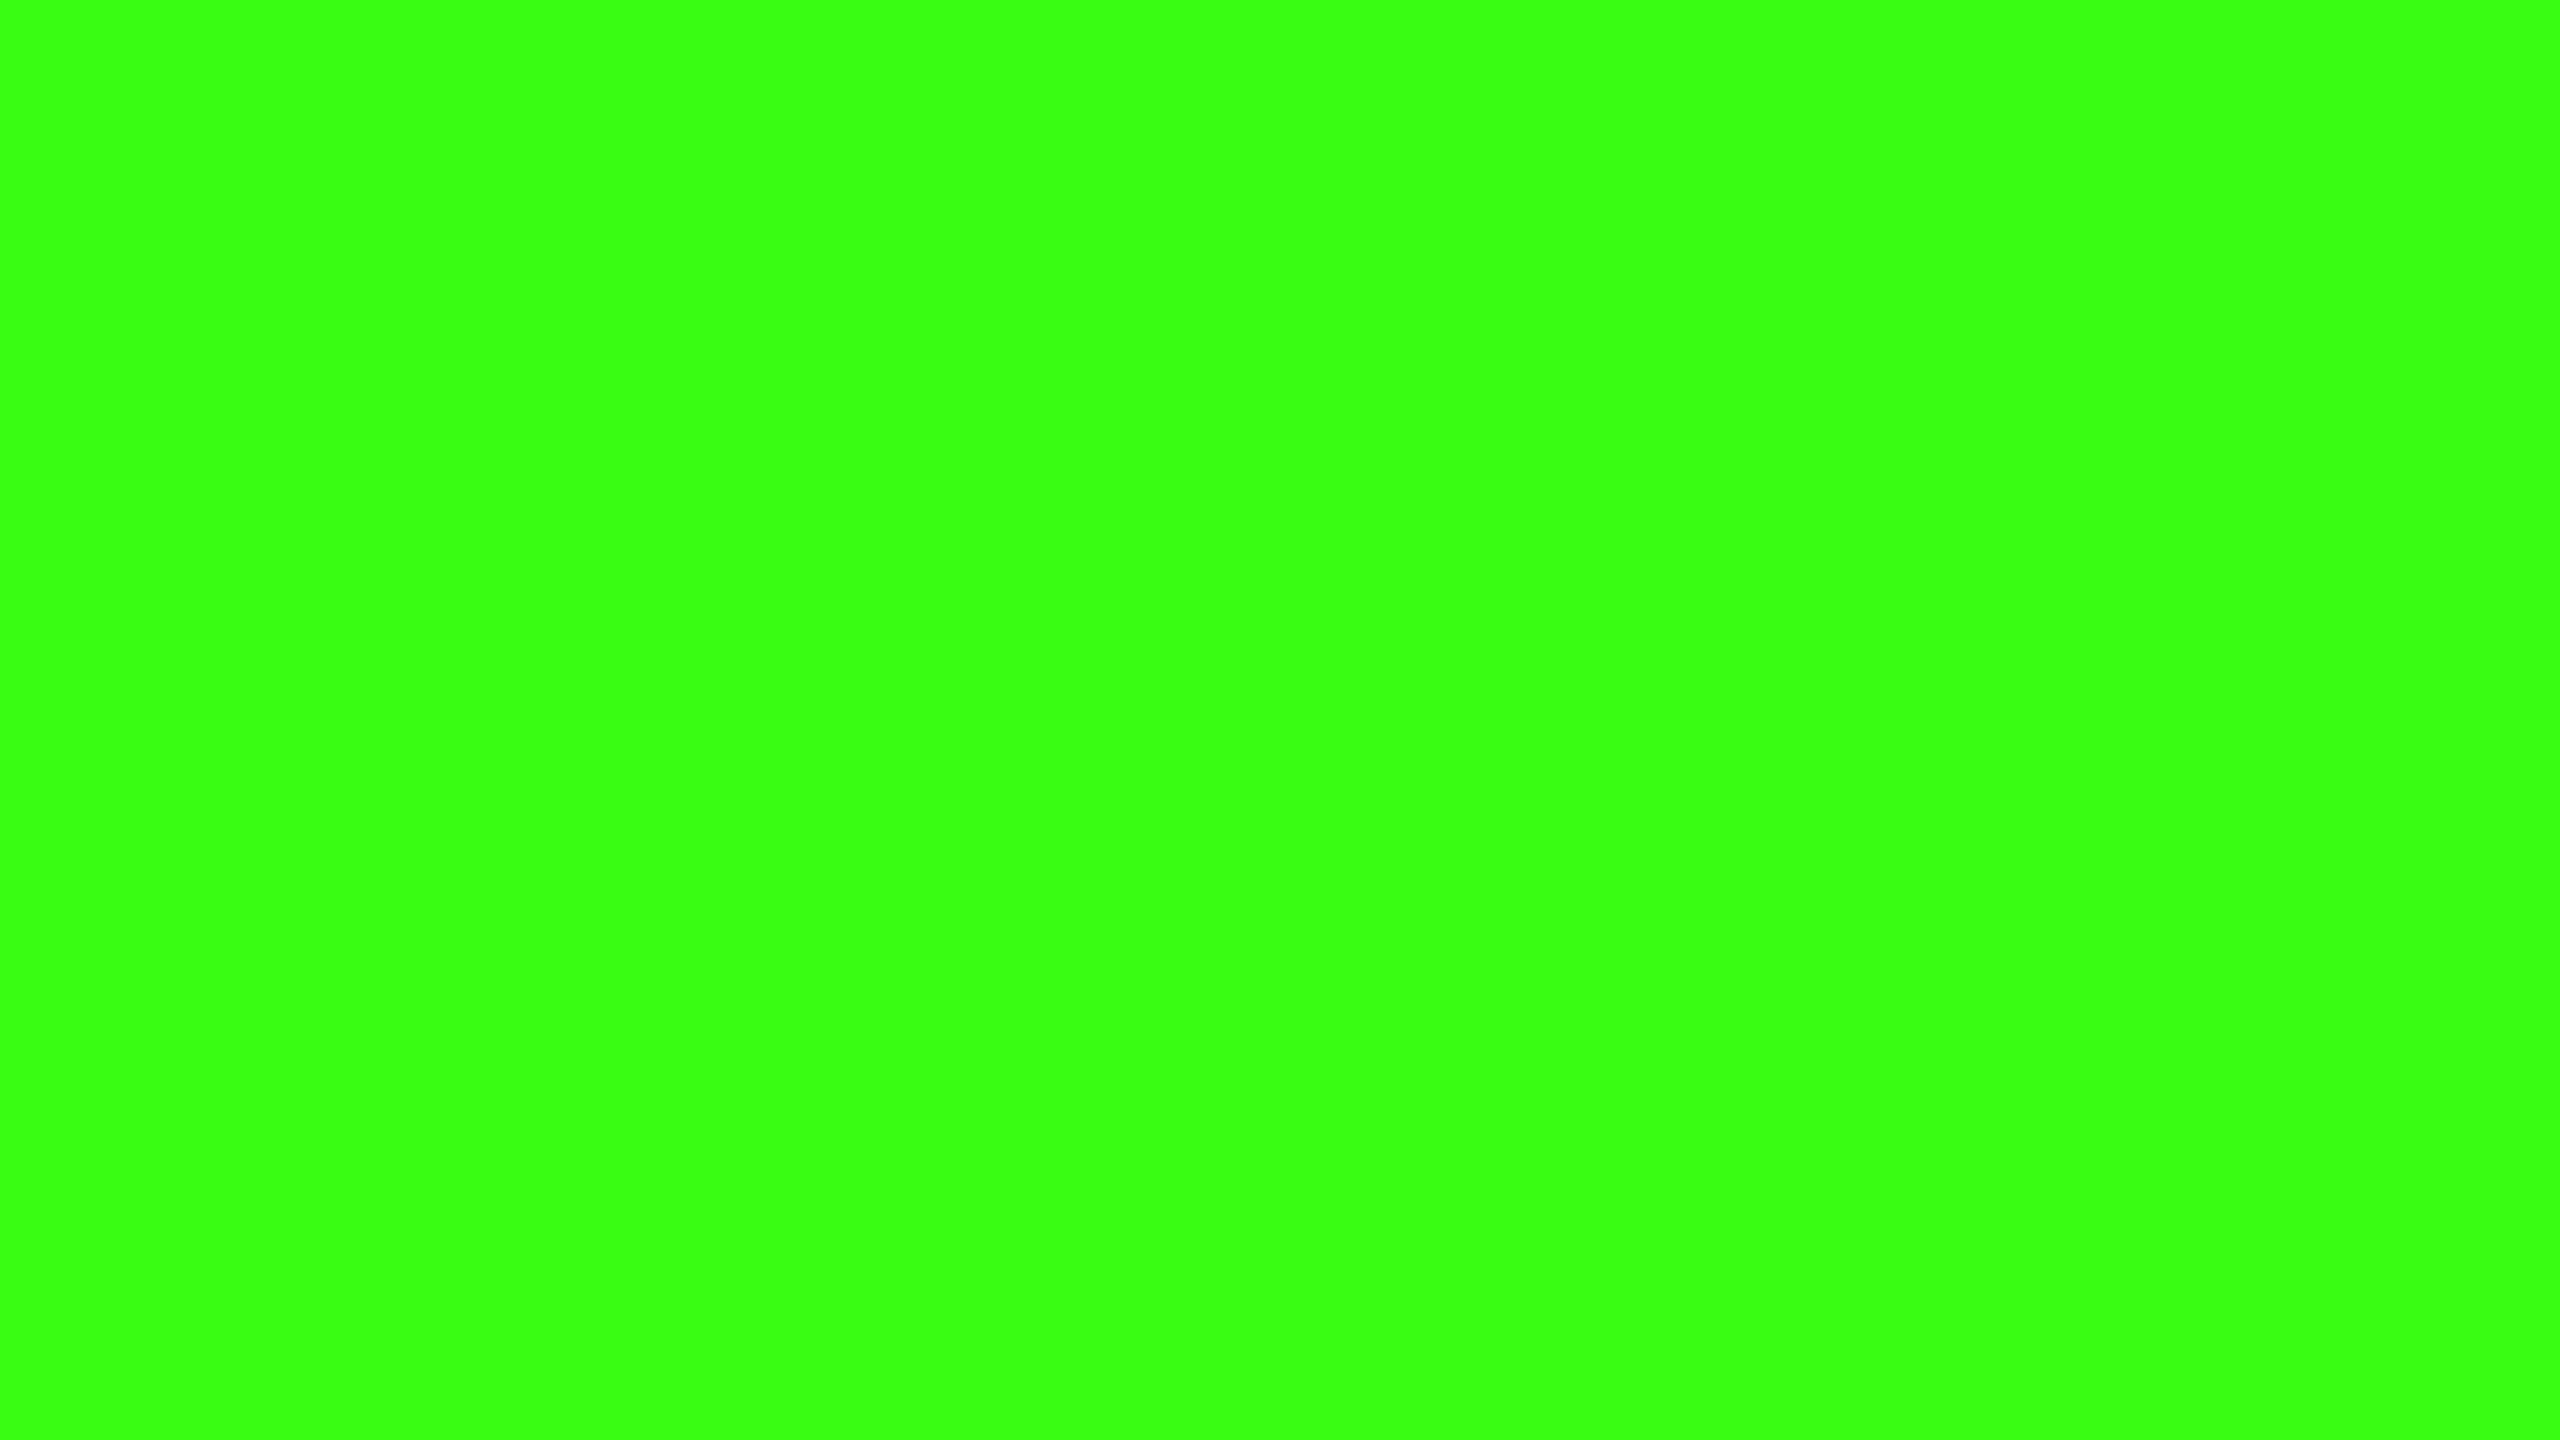 Neon Green Solid Color Wallpaper 2113 2560 x 1440   WallpaperLayercom